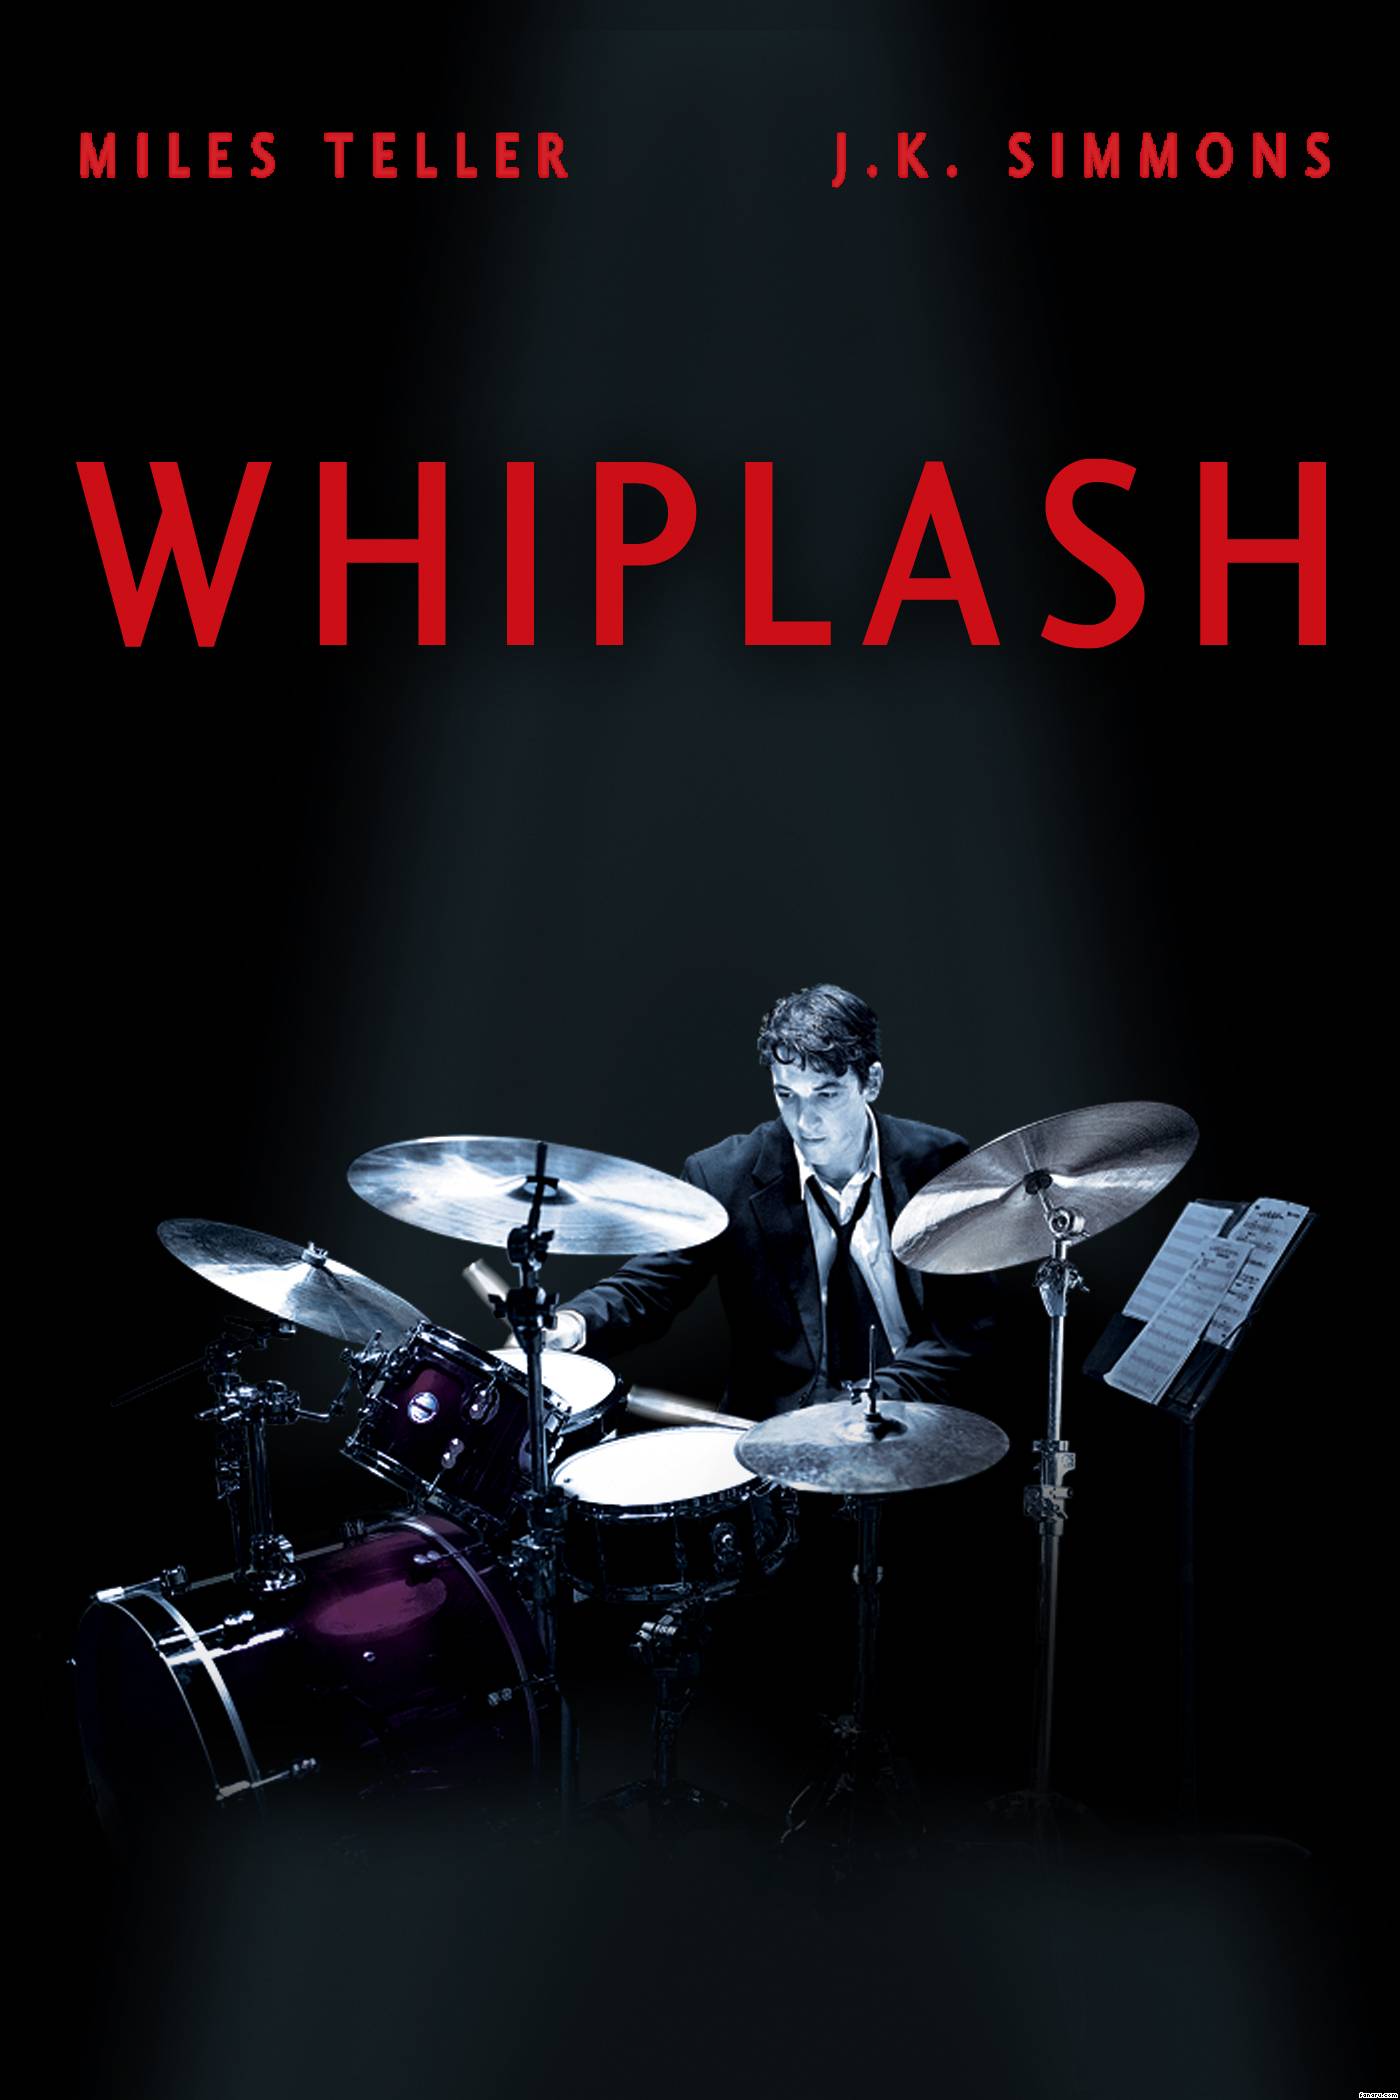 Whiplash. Full HD Widescreen wallpaper for desktop download